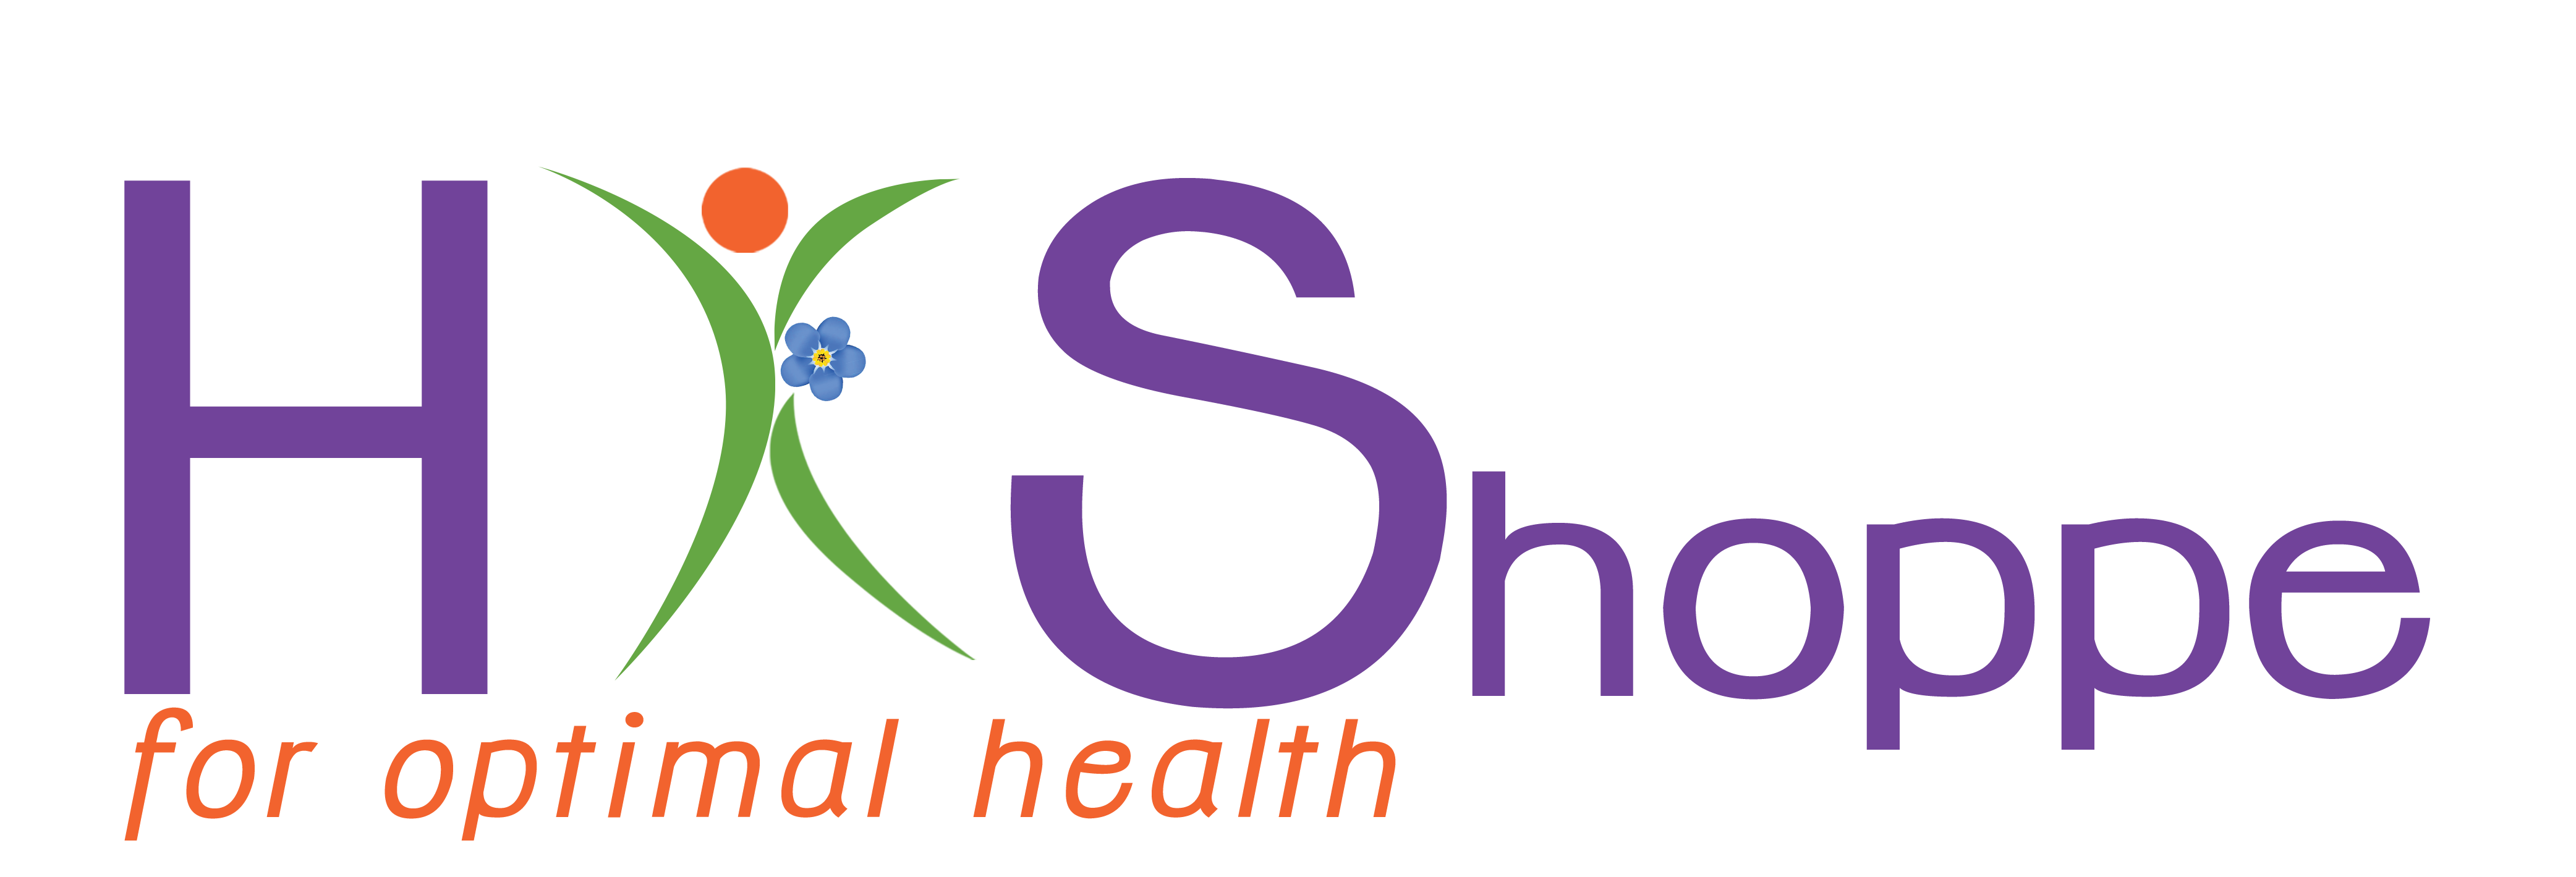 logo-hshoppe for optimal health